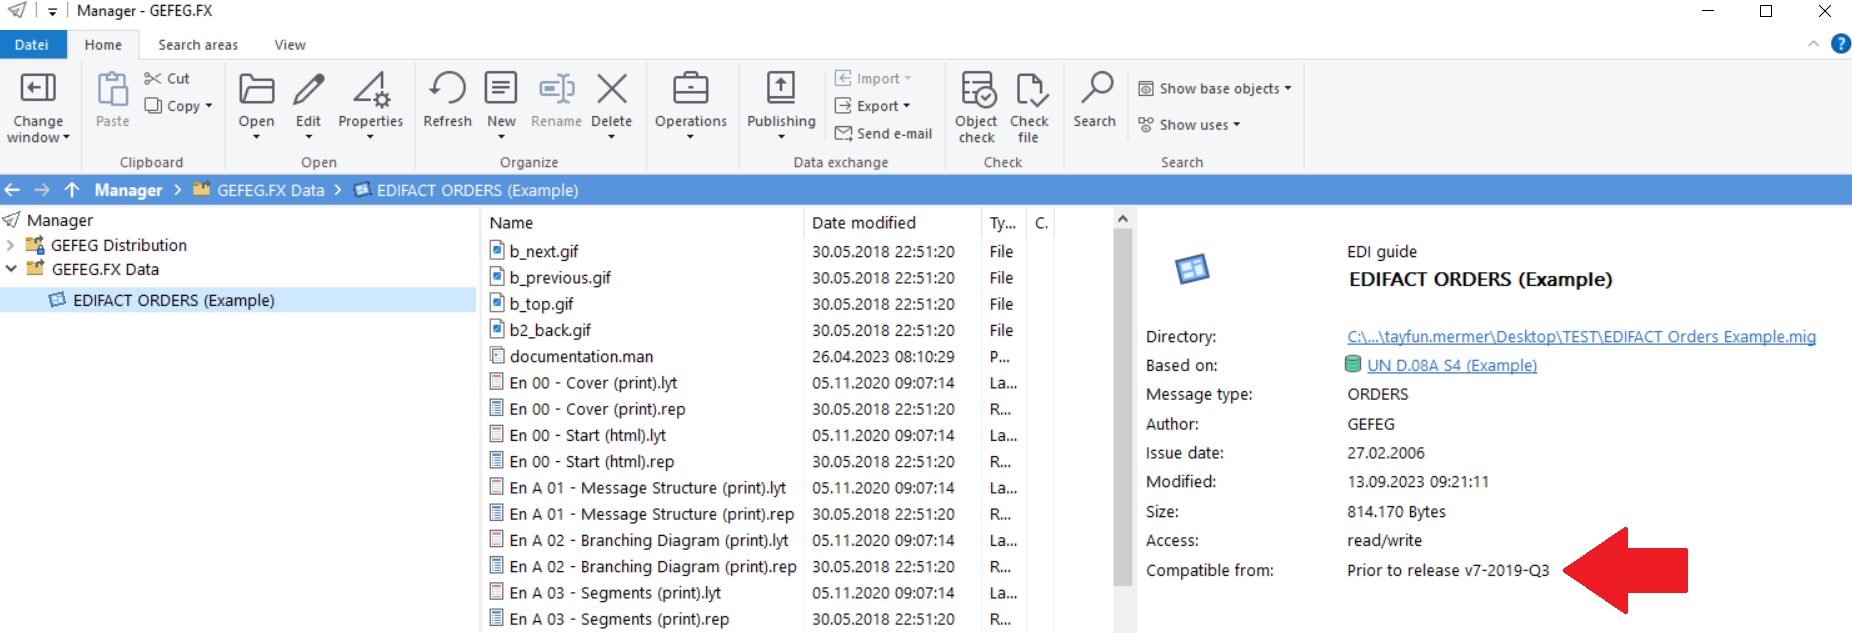 Screenshot from GEFEG.FX showing the current data format version of a GEFEG.FX object